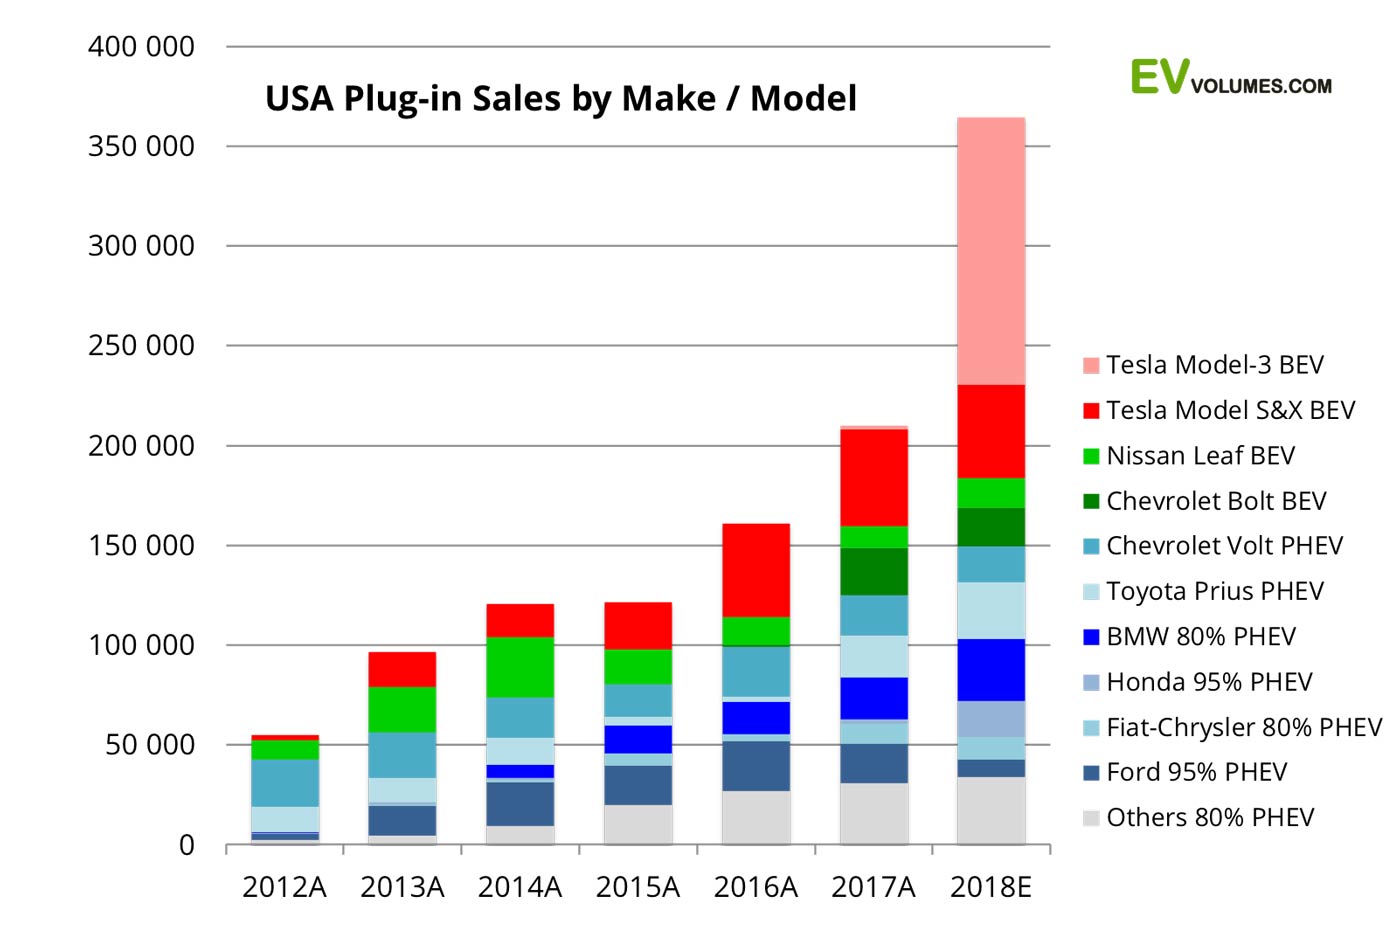 Tesla Motors Stock Price Chart